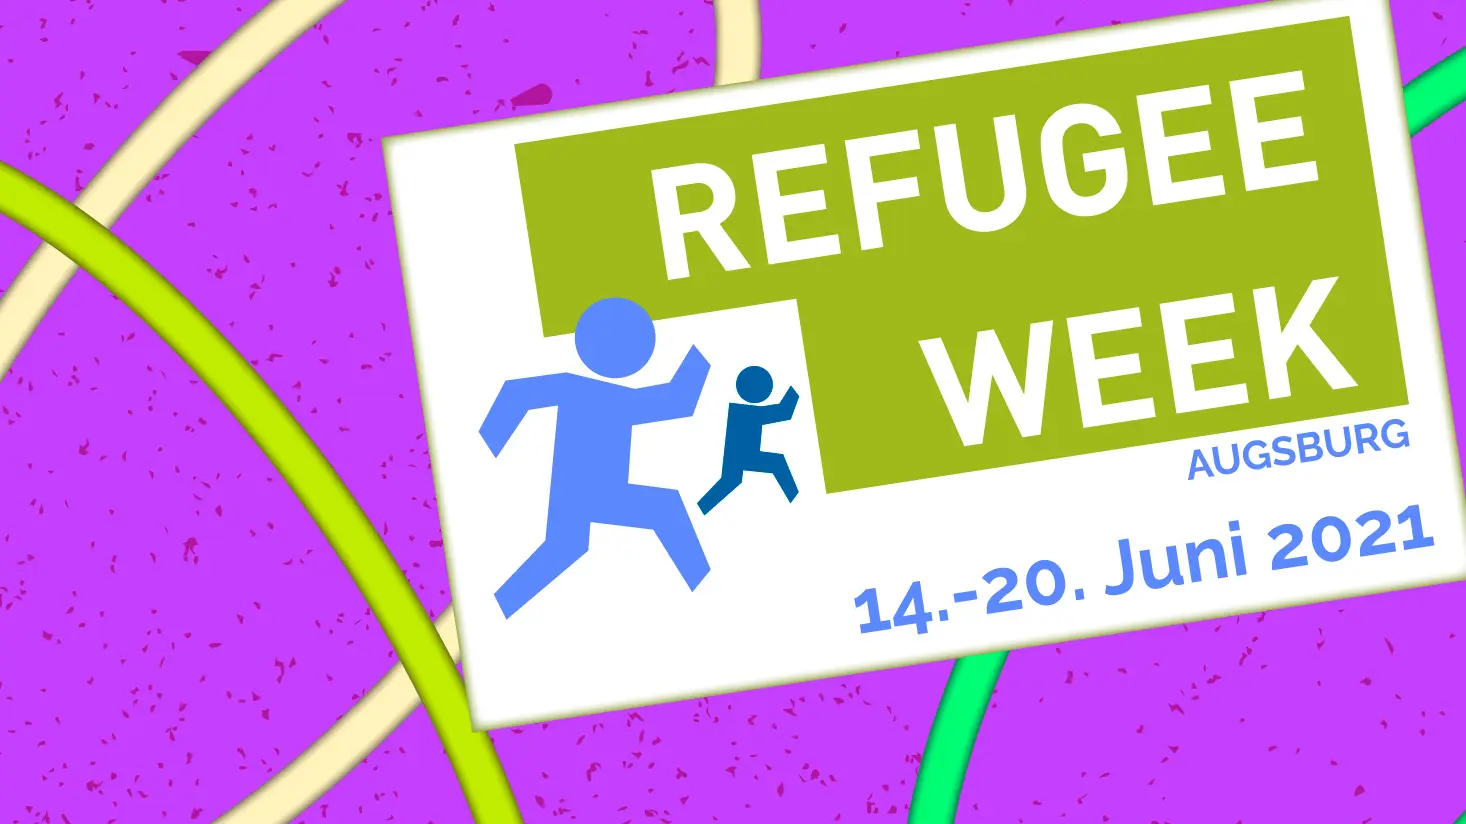 RefugeeWeek Augsburg 2021